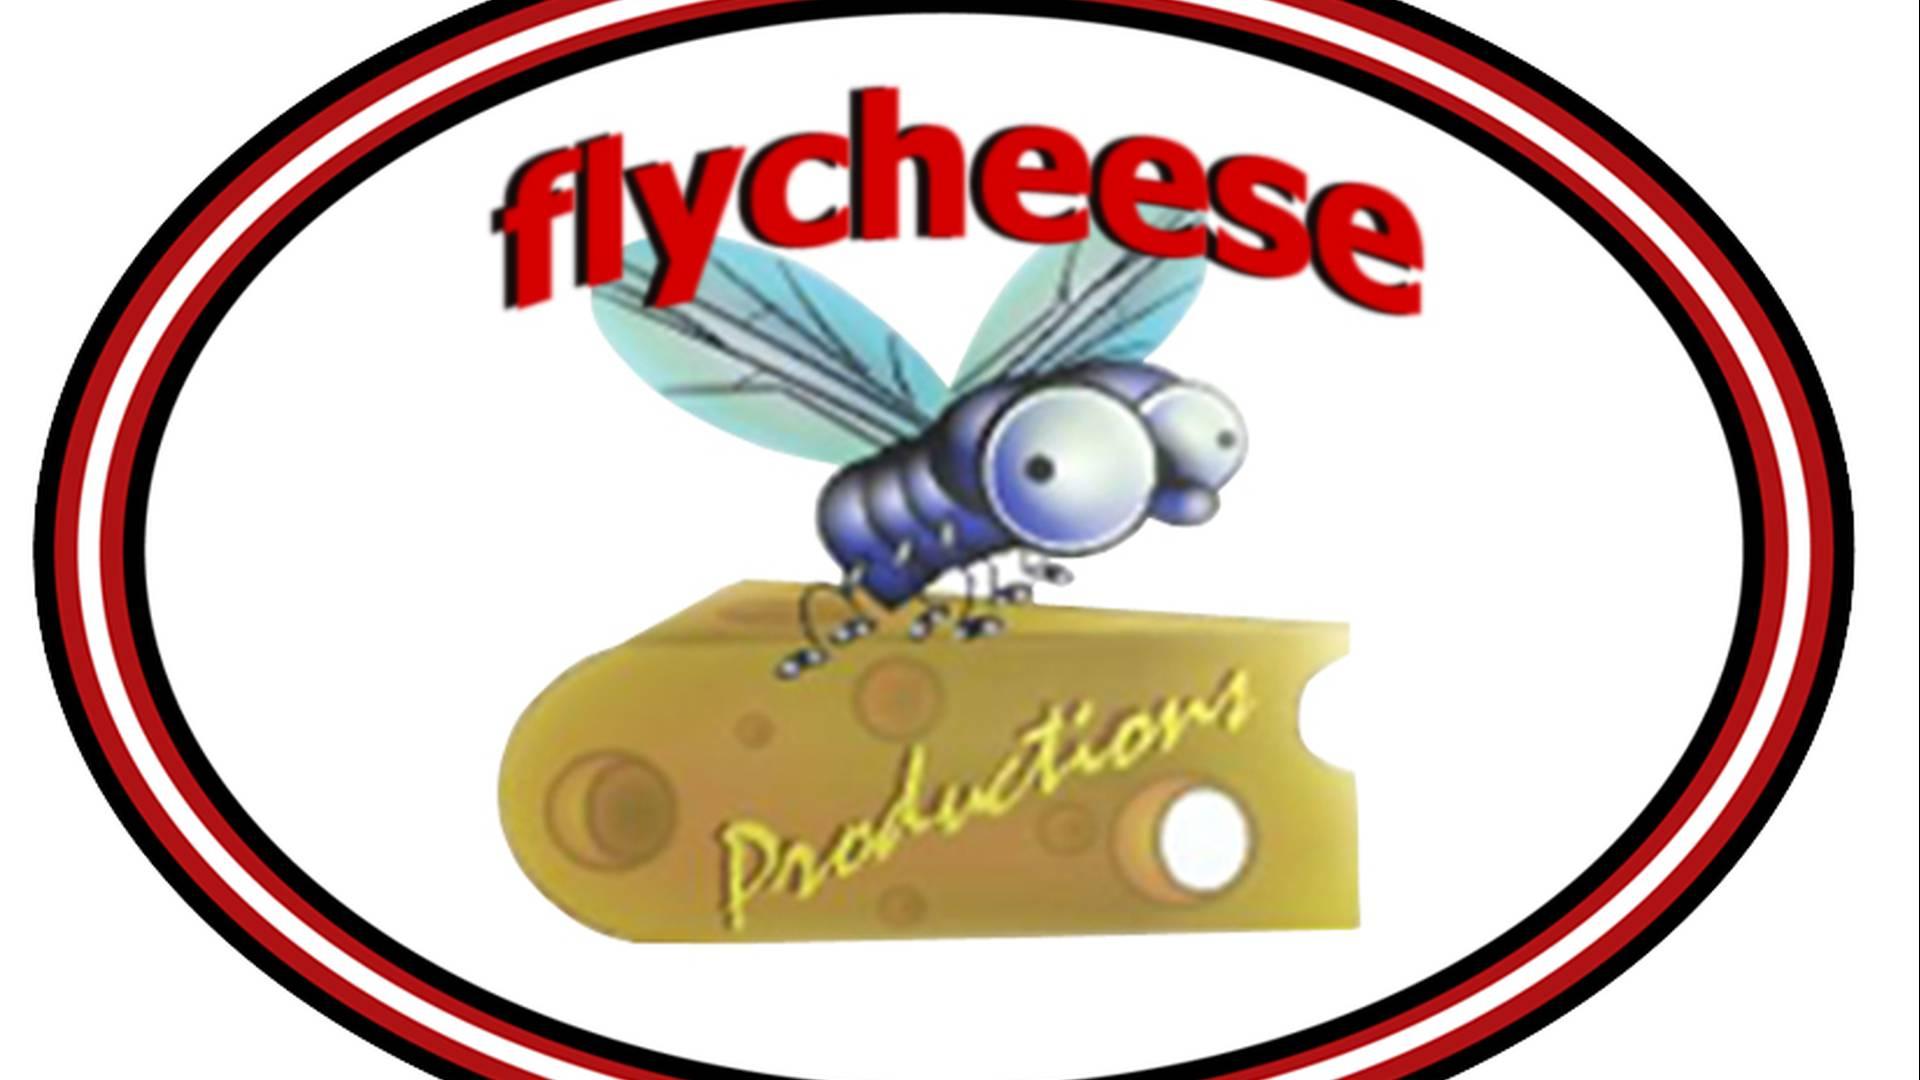 Flycheese photo